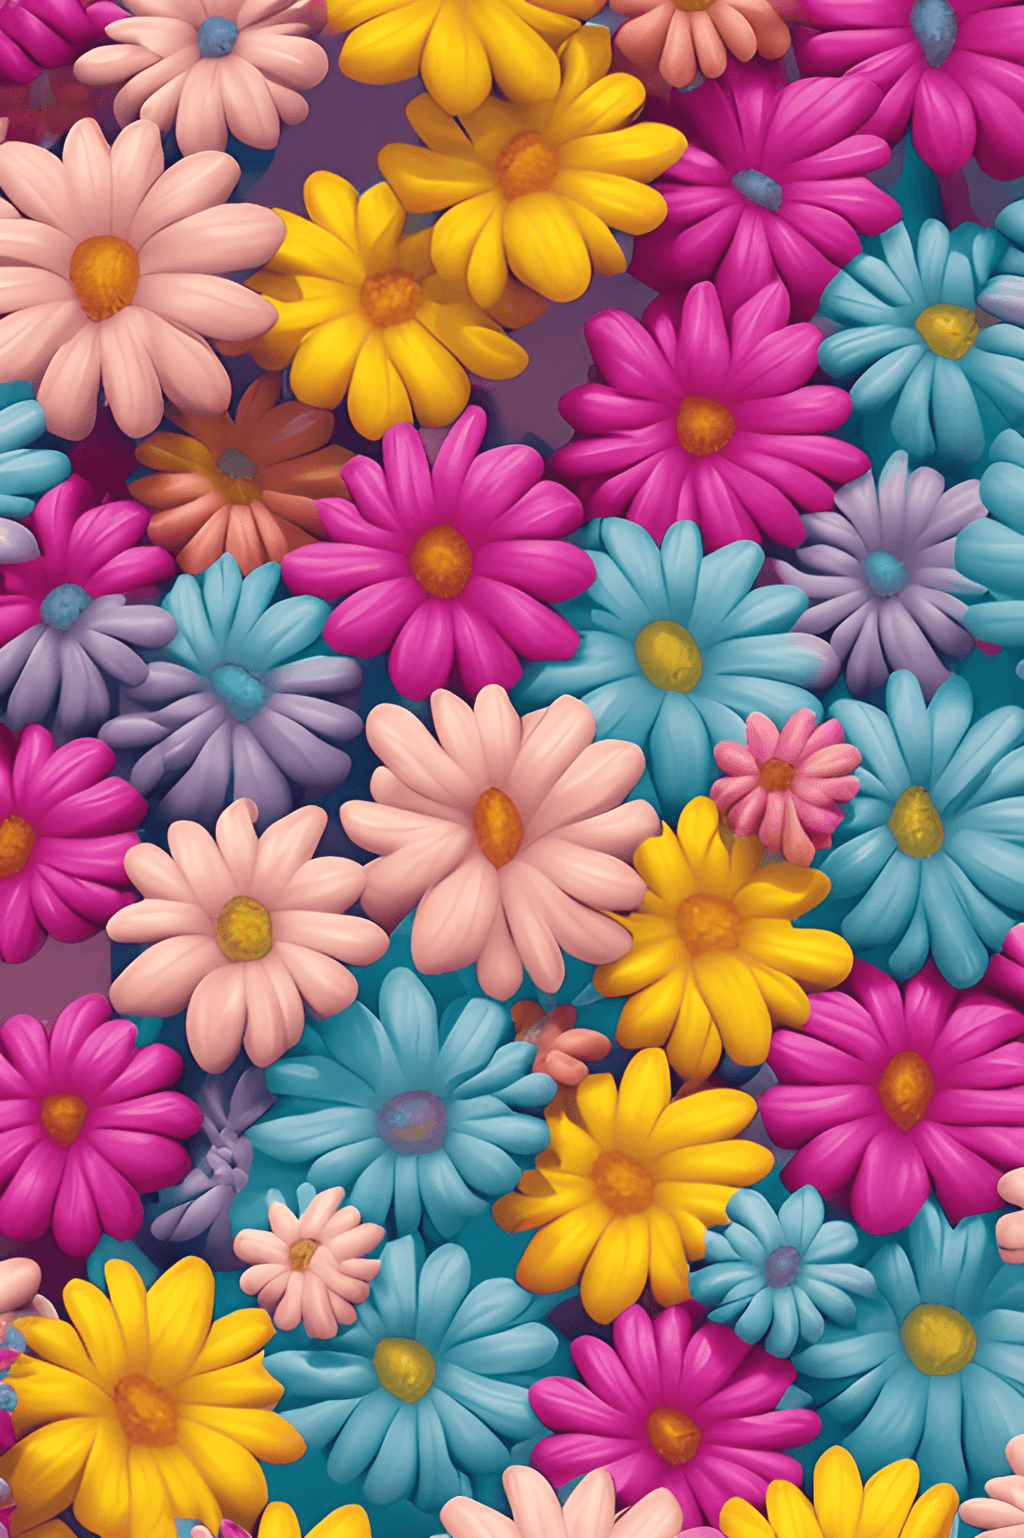 Pastel Flowers Wallpapers - 4k, HD Pastel Flowers Backgrounds on ...